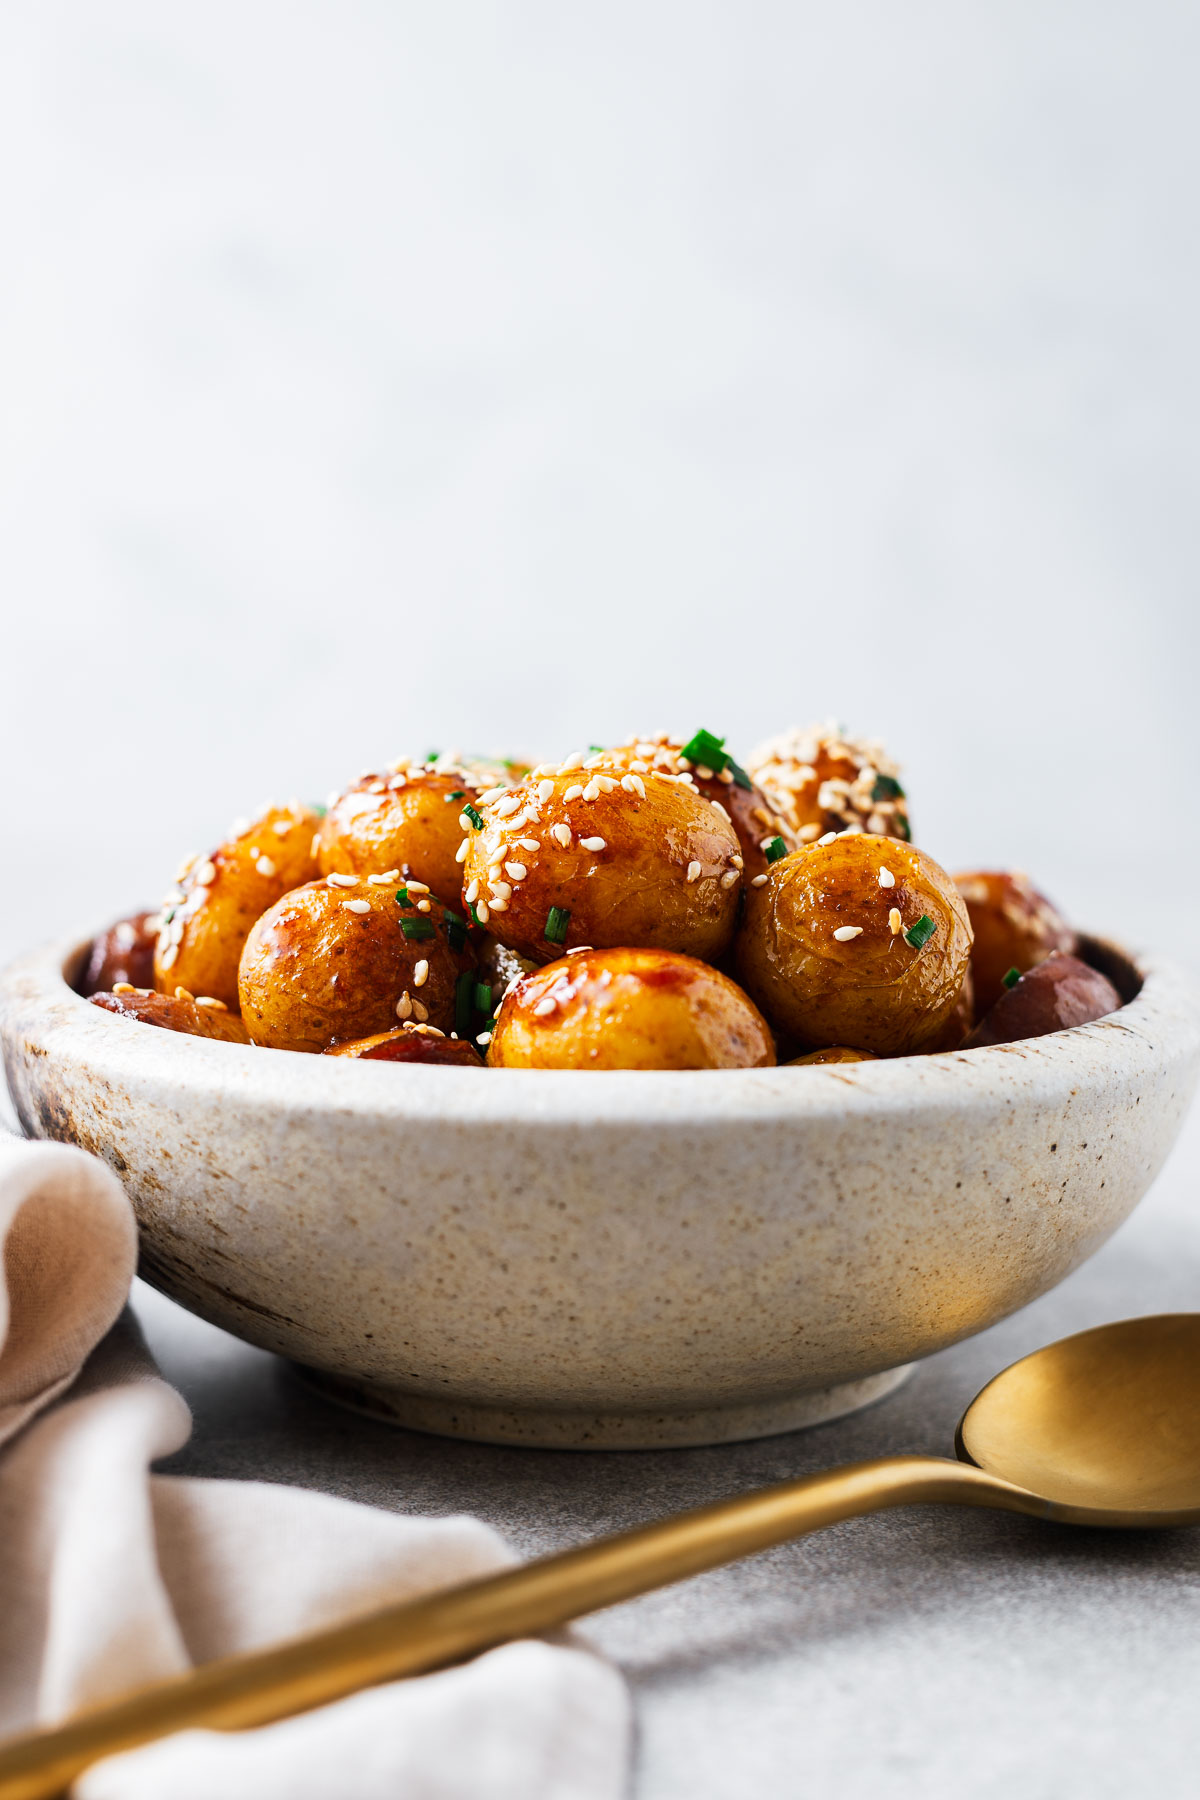 Gamja Jorim (Korean Braised Potatoes)